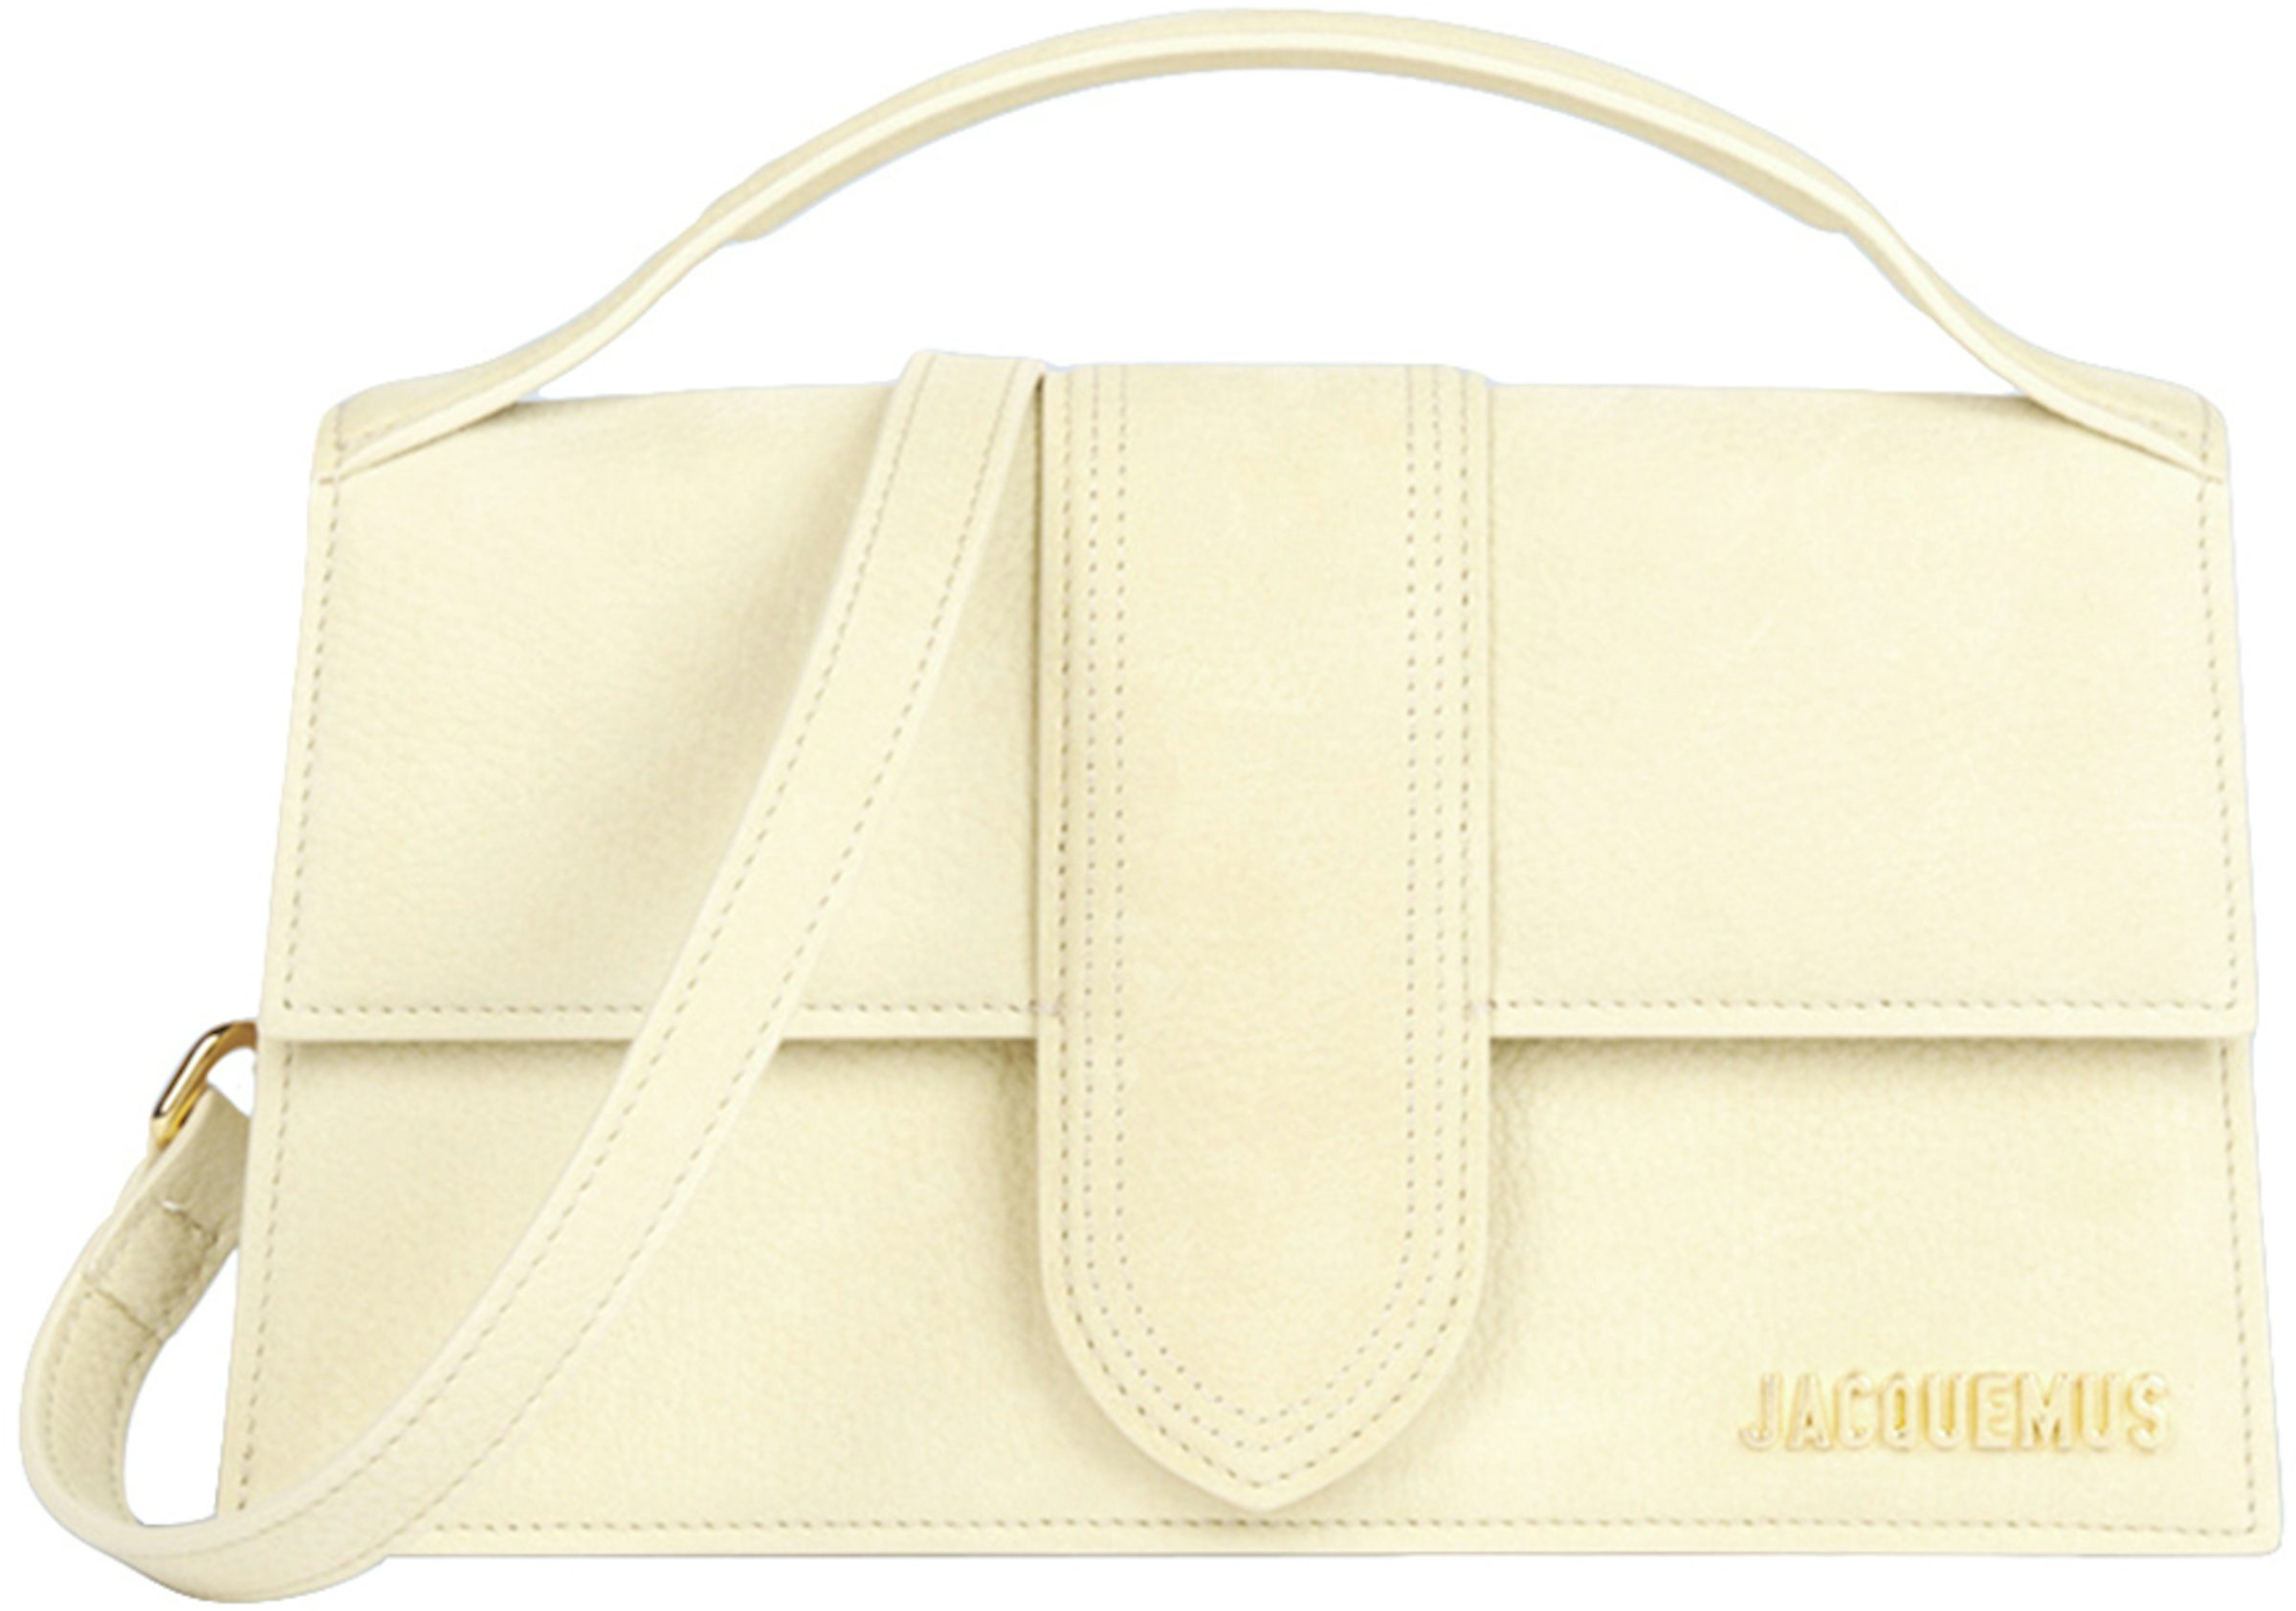 Polo Ralph Lauren Brown Mini Suede Tote Handbag - $165 tag price